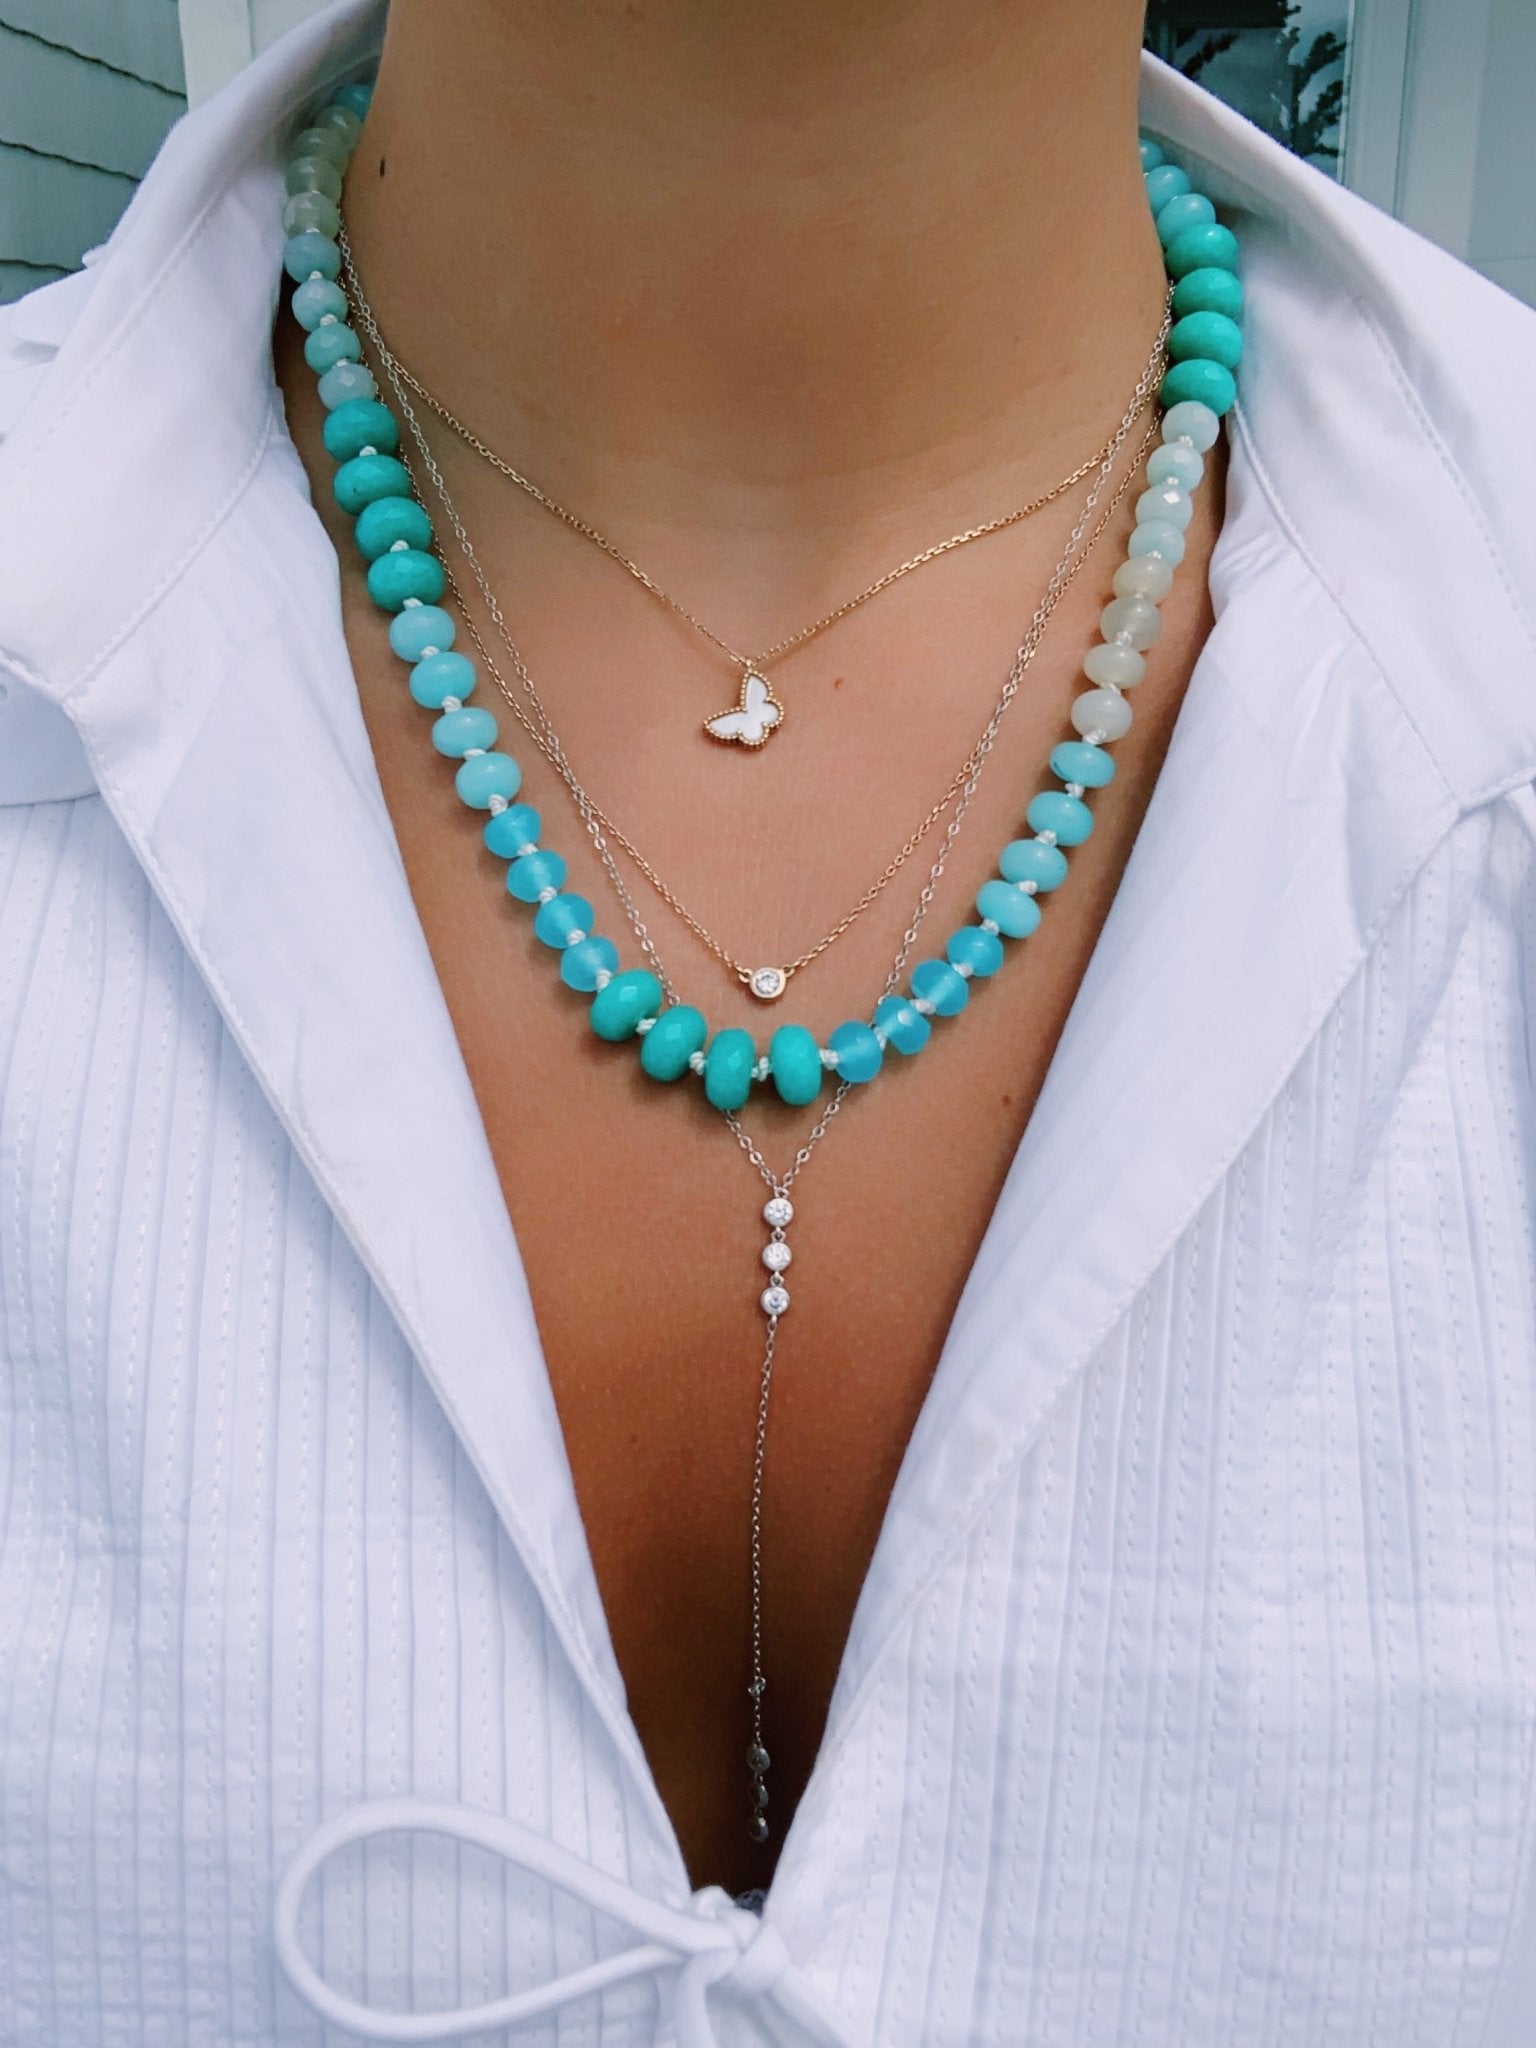 Shades Of The Sea, Colorful Summer Necklace, Ombré Green & Aqua Semi Precious Stone Necklace with 14k GV Clasp - Abigail Fox Designs